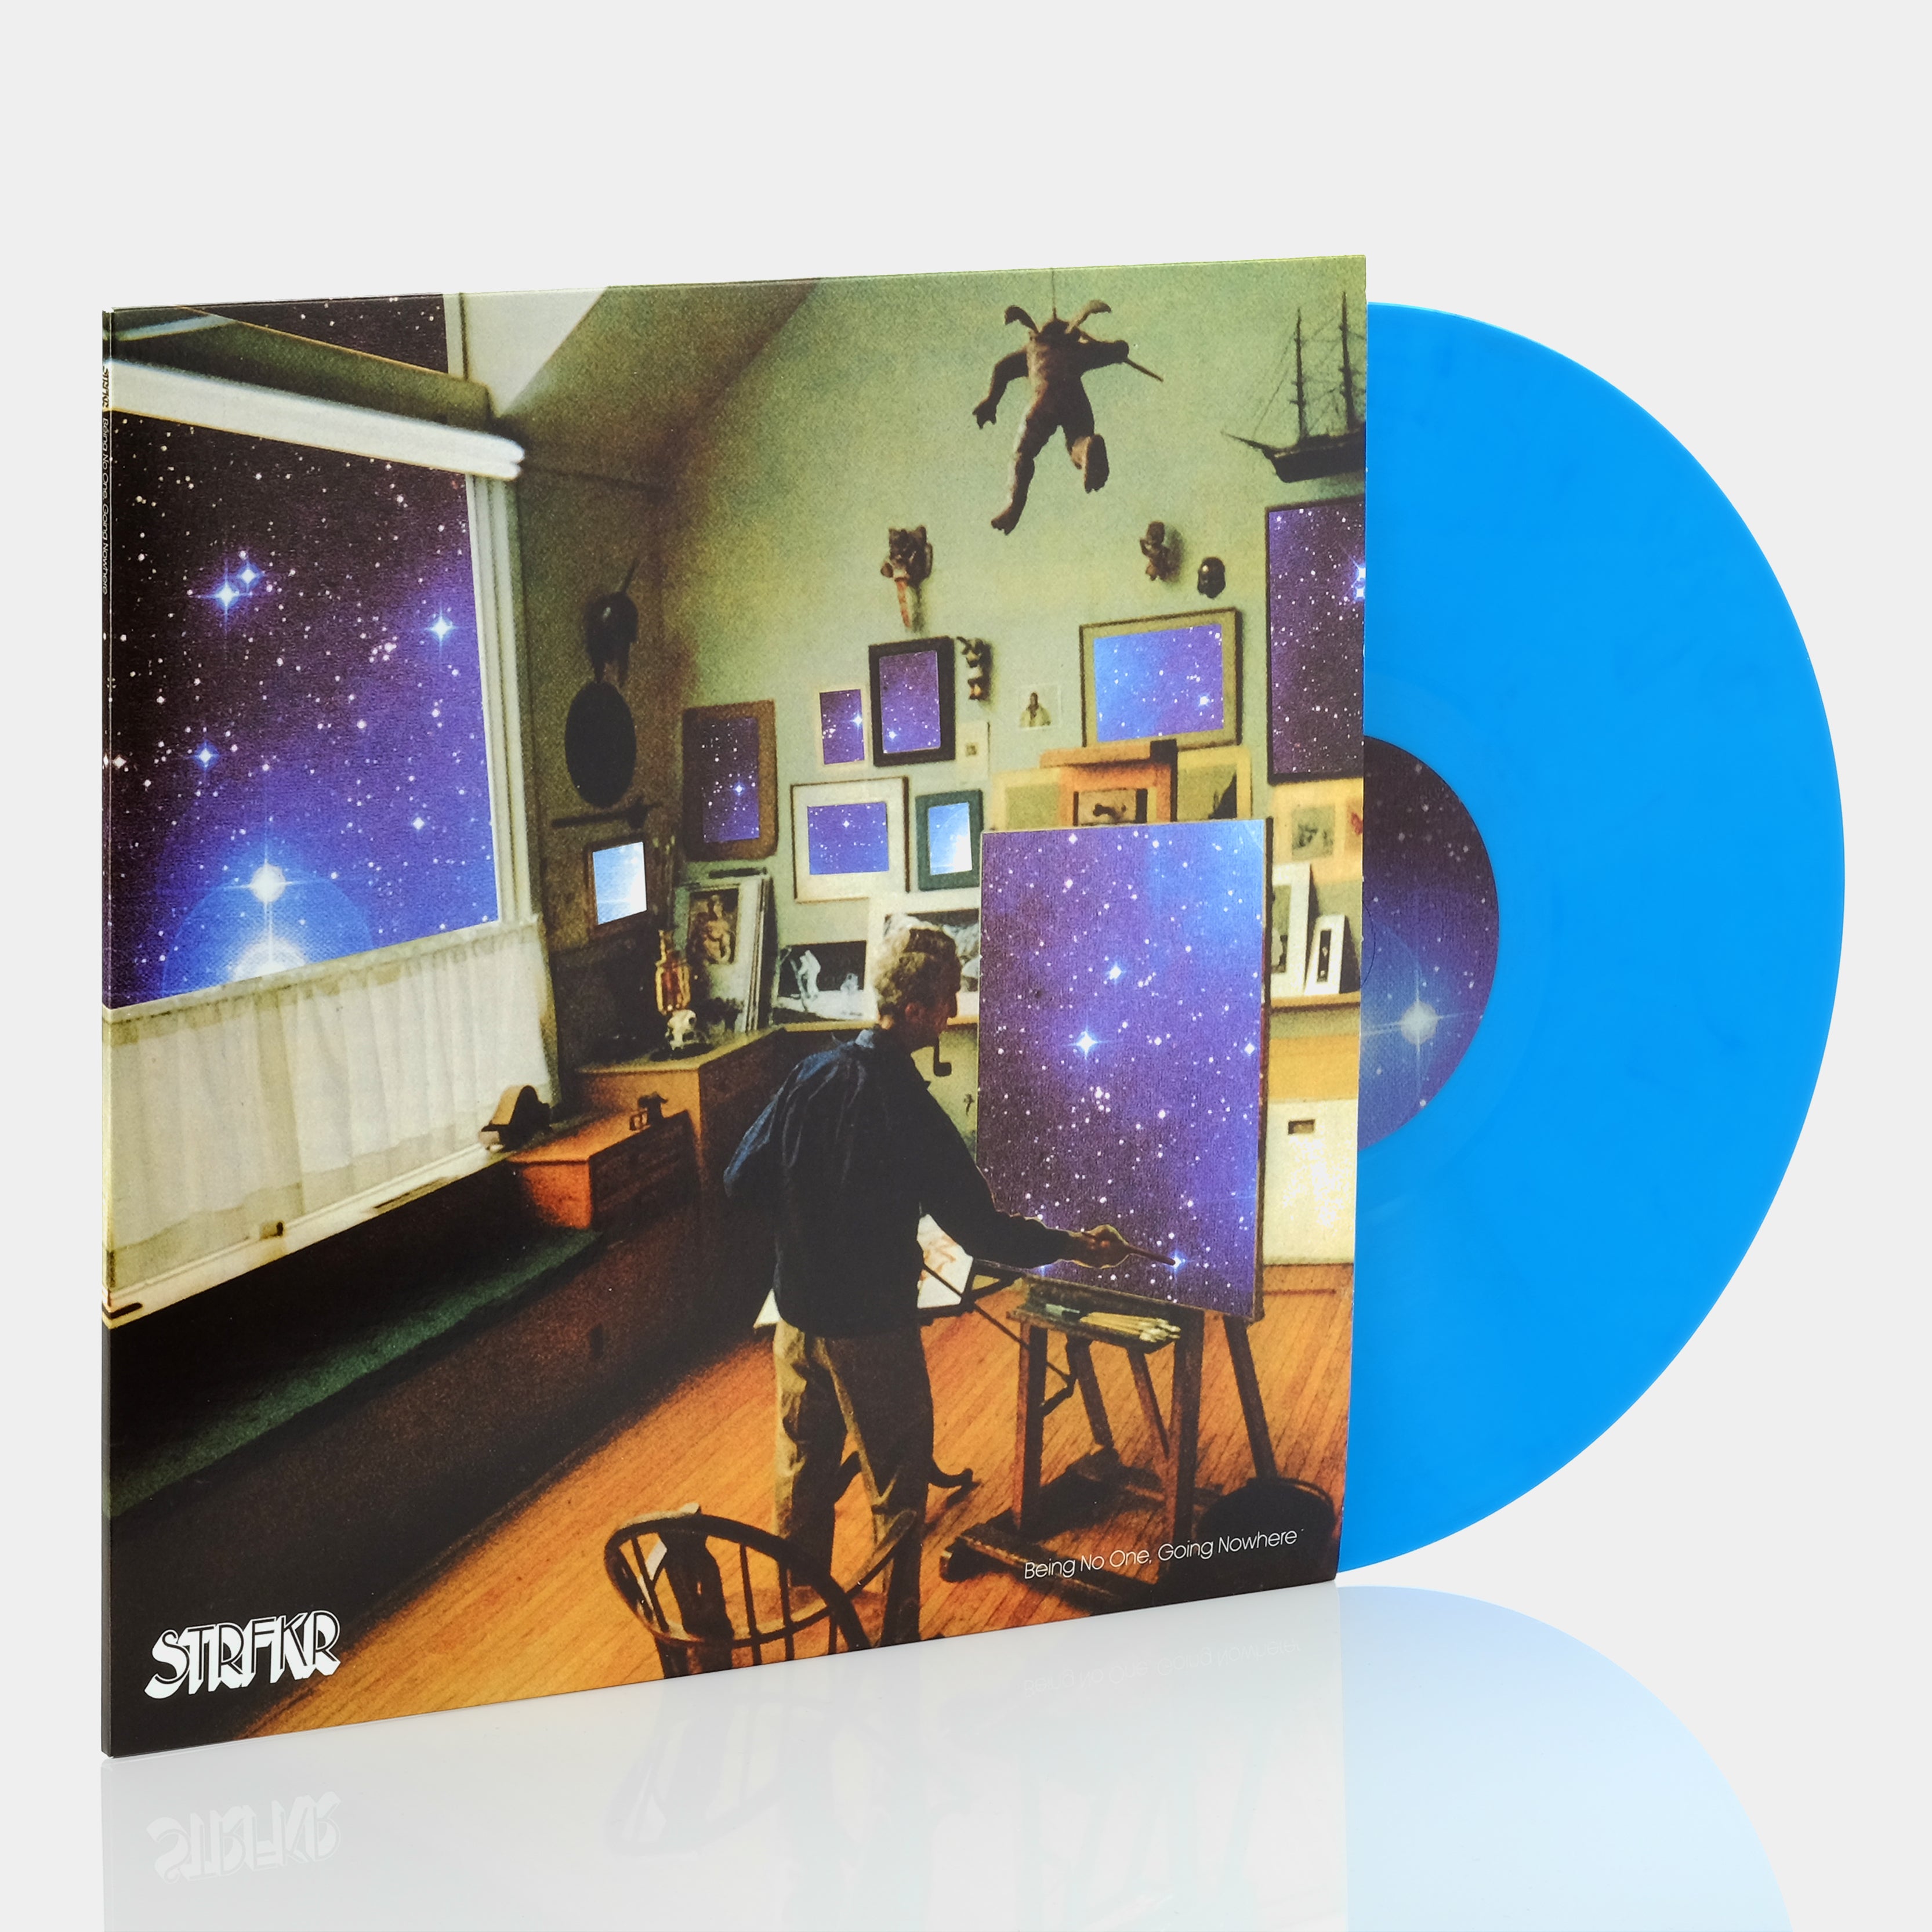 STRFKR - Being No One, Going Nowhere LP Light Blue Vinyl Record